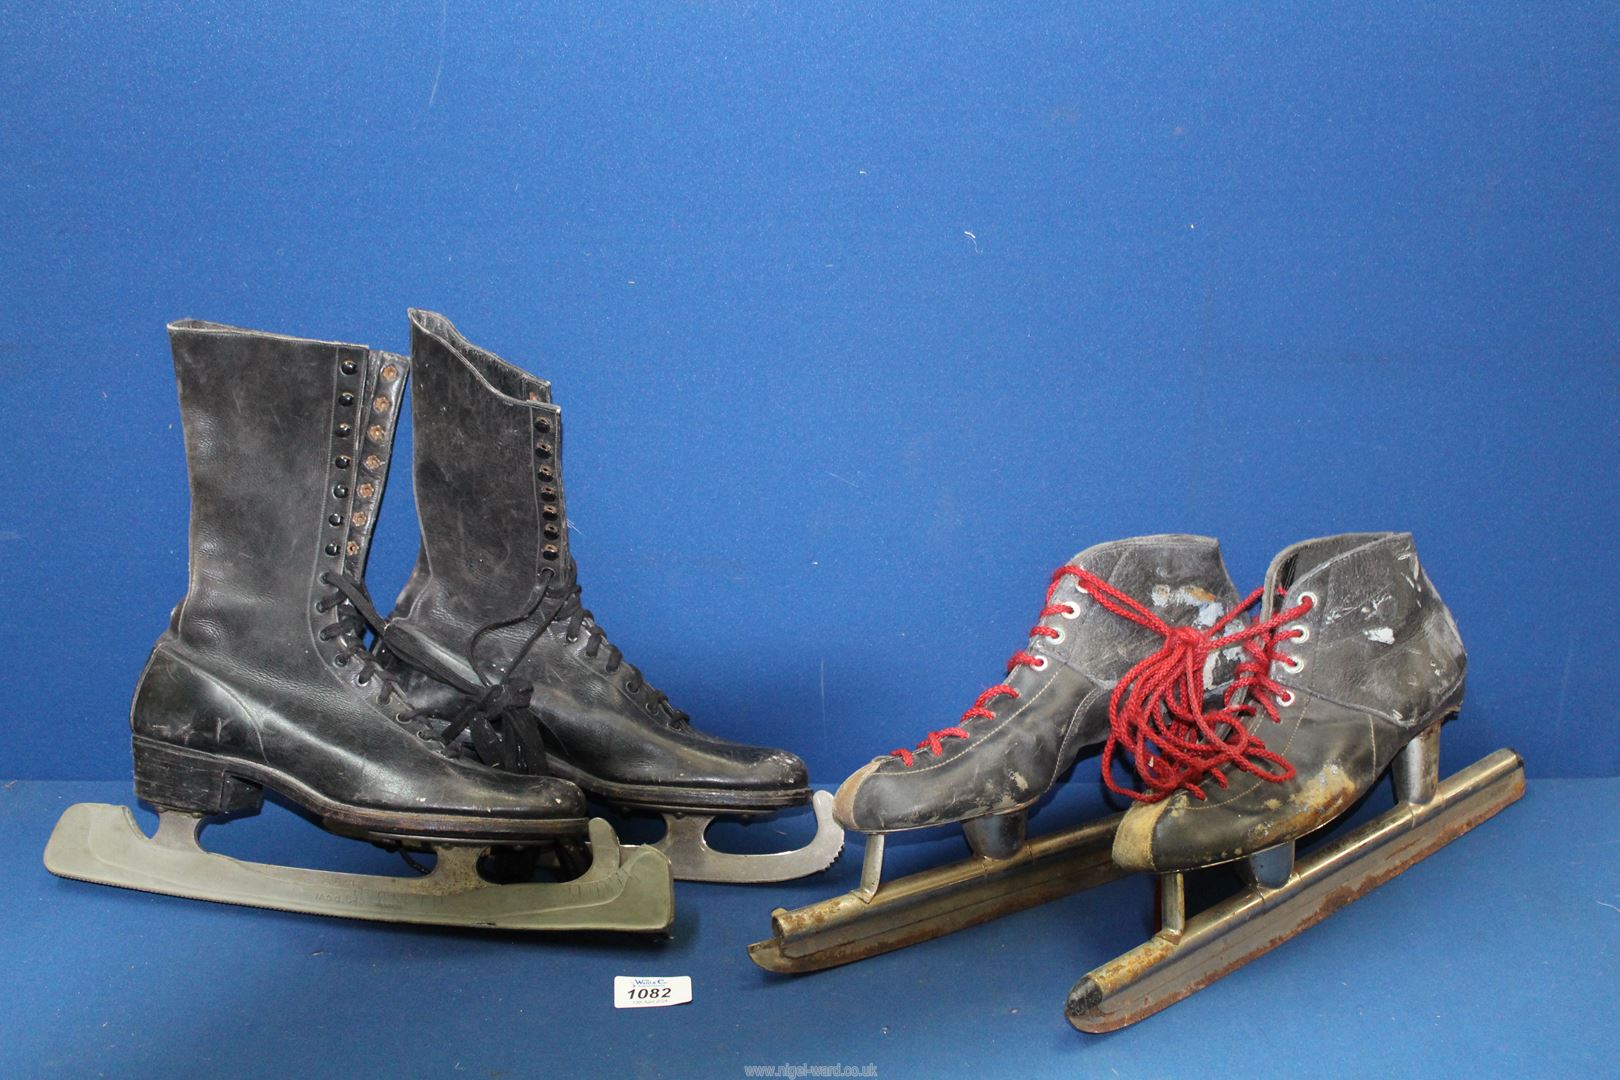 A pair of vintage leather ice skates plus ornate pair of speed ice skates.